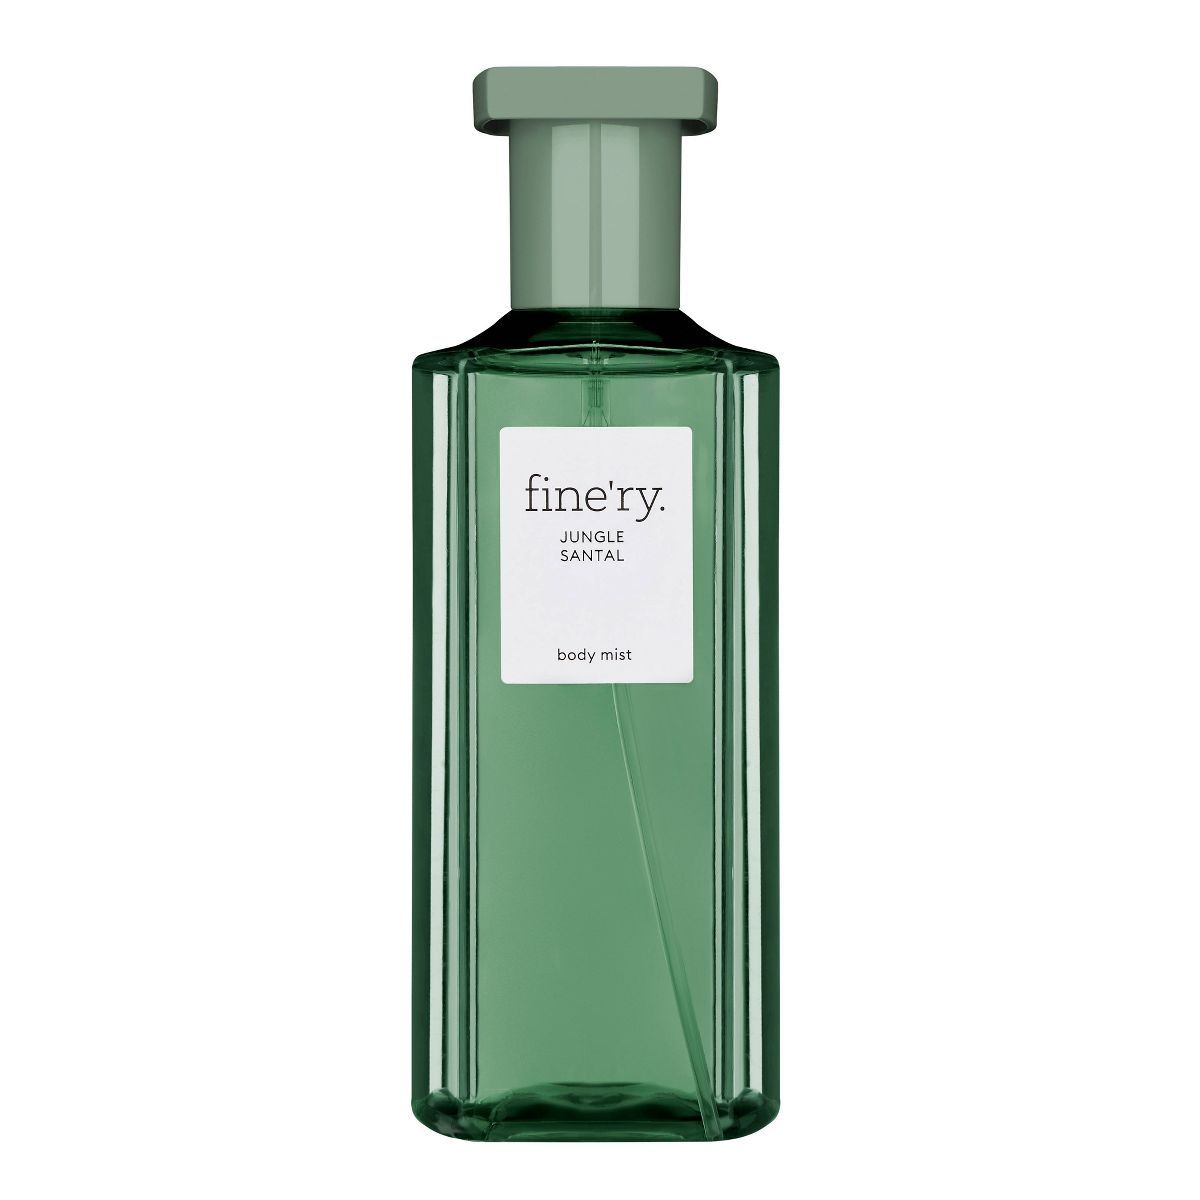 Fine'ry Body Mist Fragrance Spray - Jungle Santal - 5 fl oz | Target